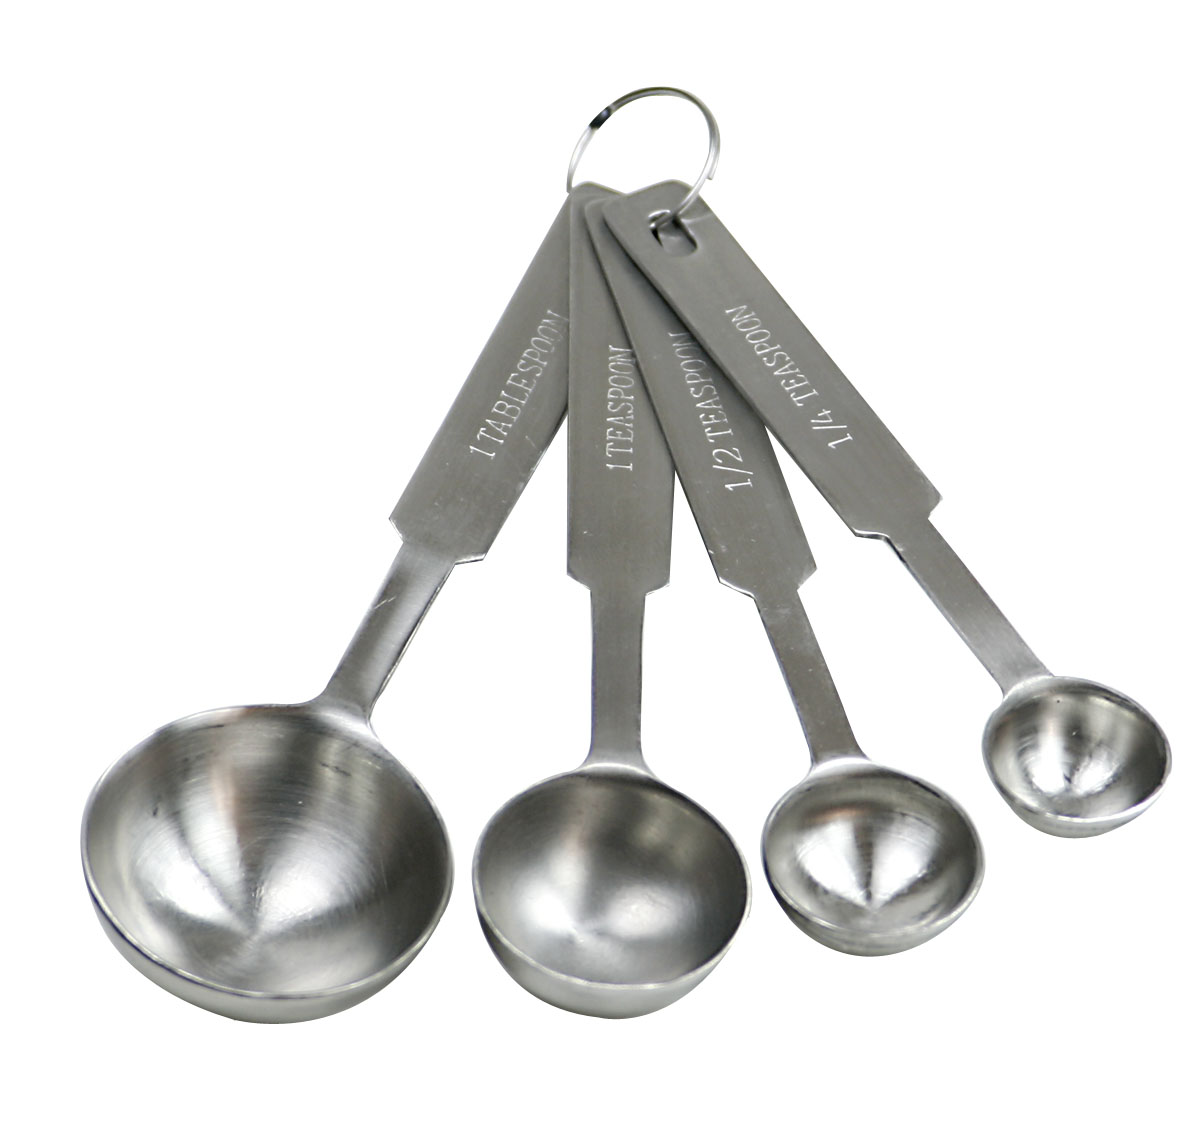  Stainless Steel Measuring Spoons - Set of 4 Premium